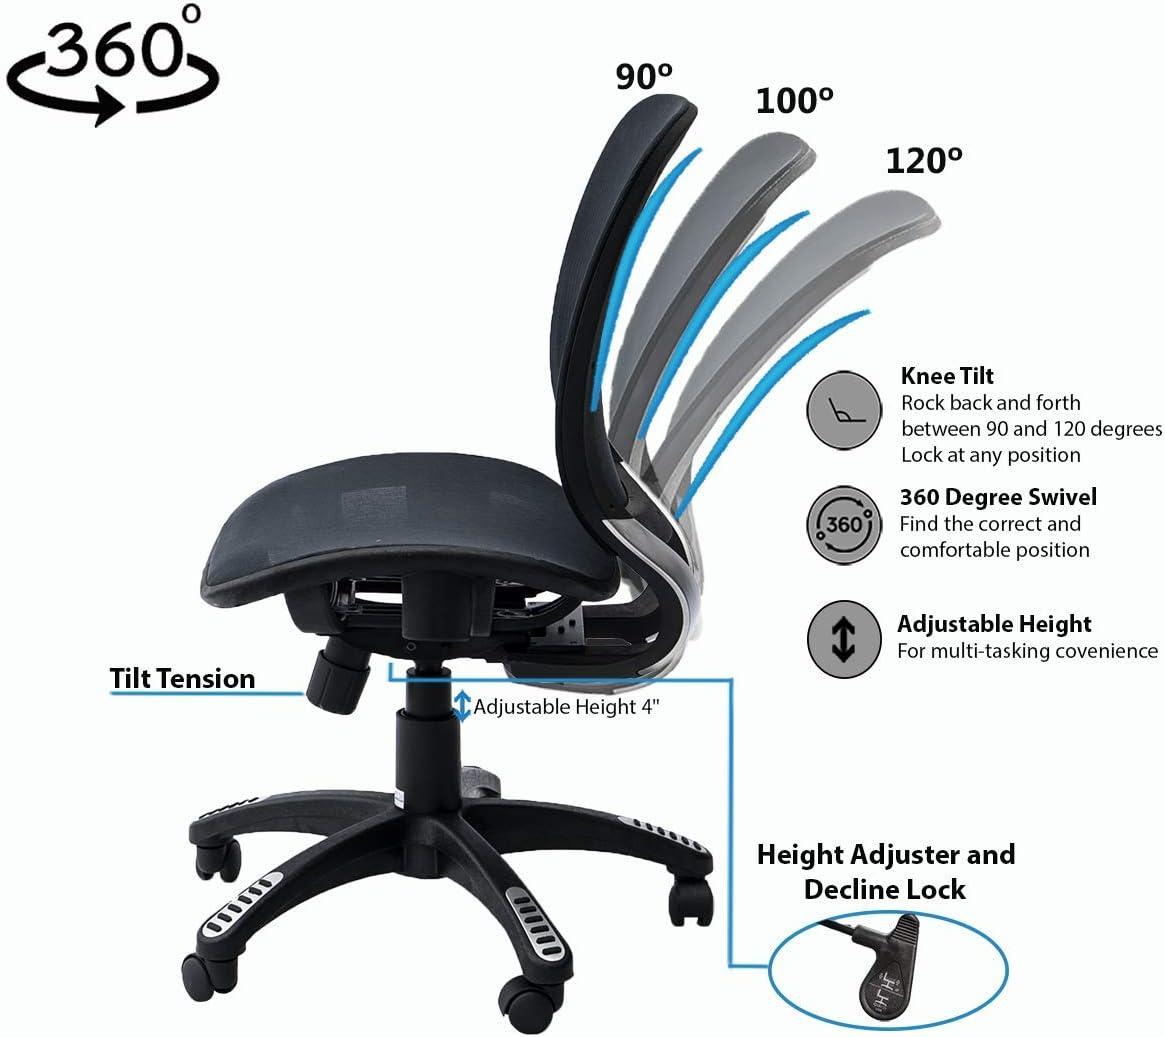 ErgoFlex 25" Black Mesh Ergonomic Swivel Armless Office Chair